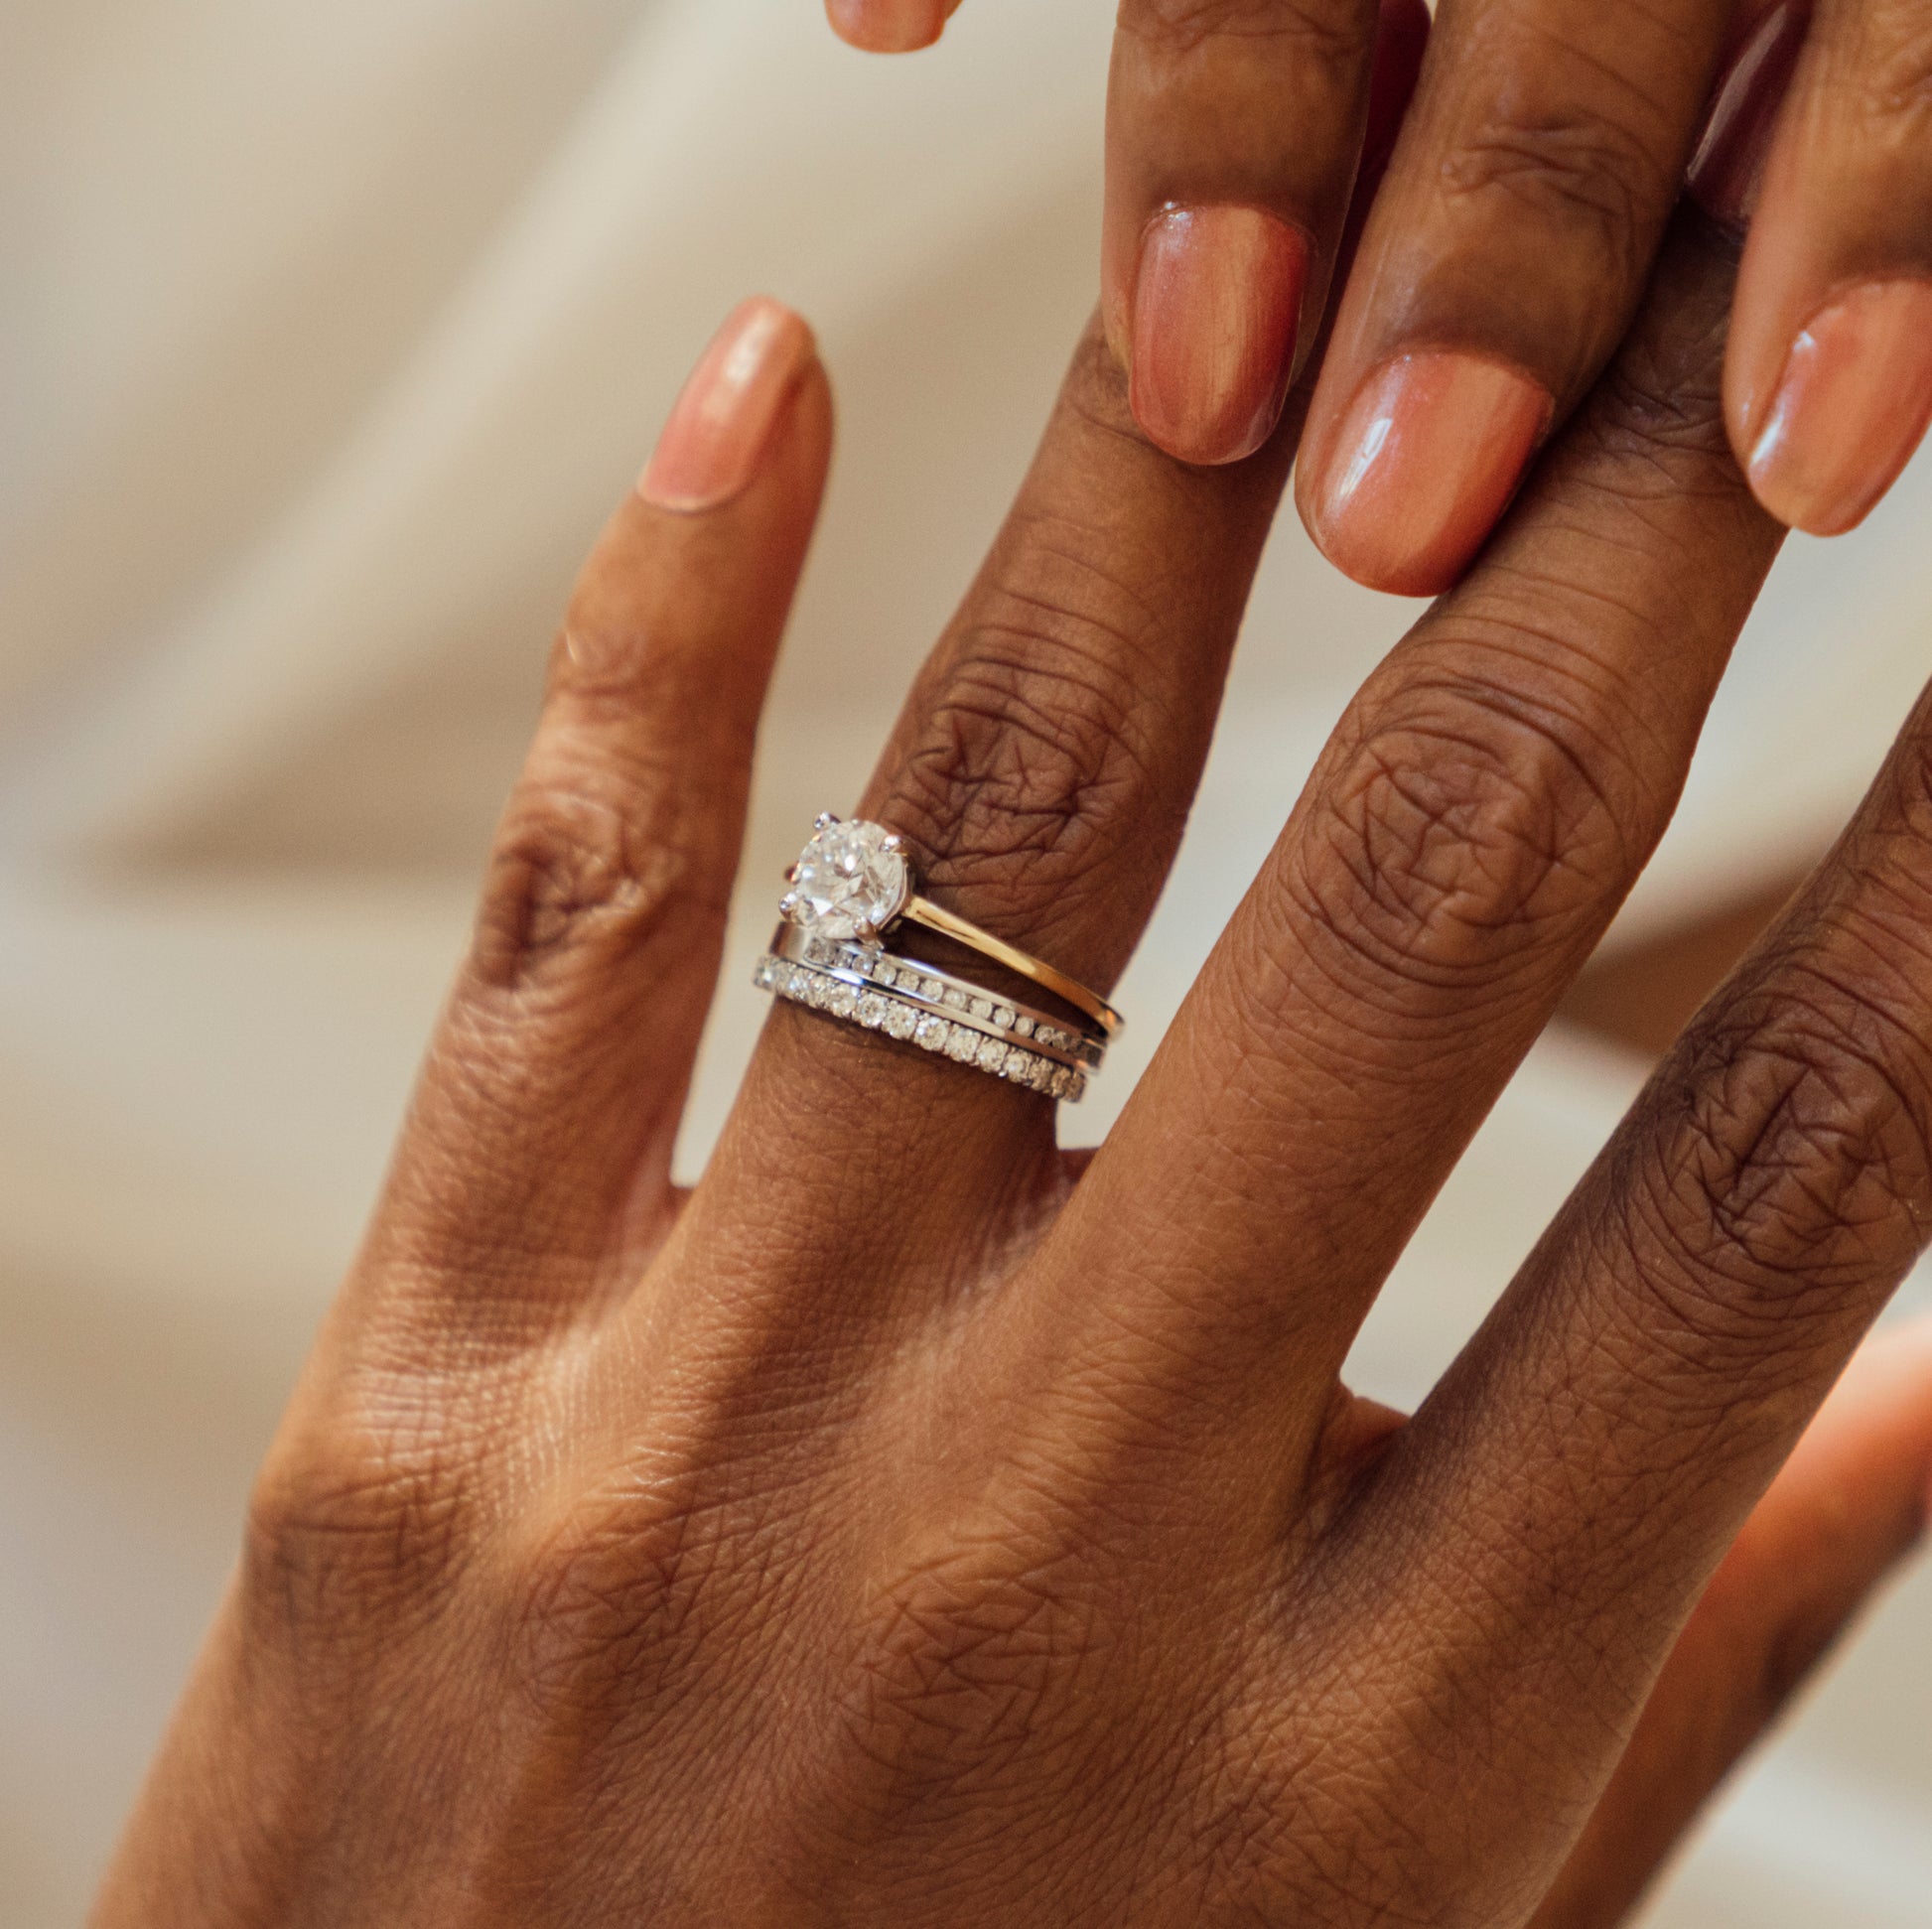 Buy Emma Round Diamond Engagement Ring Online